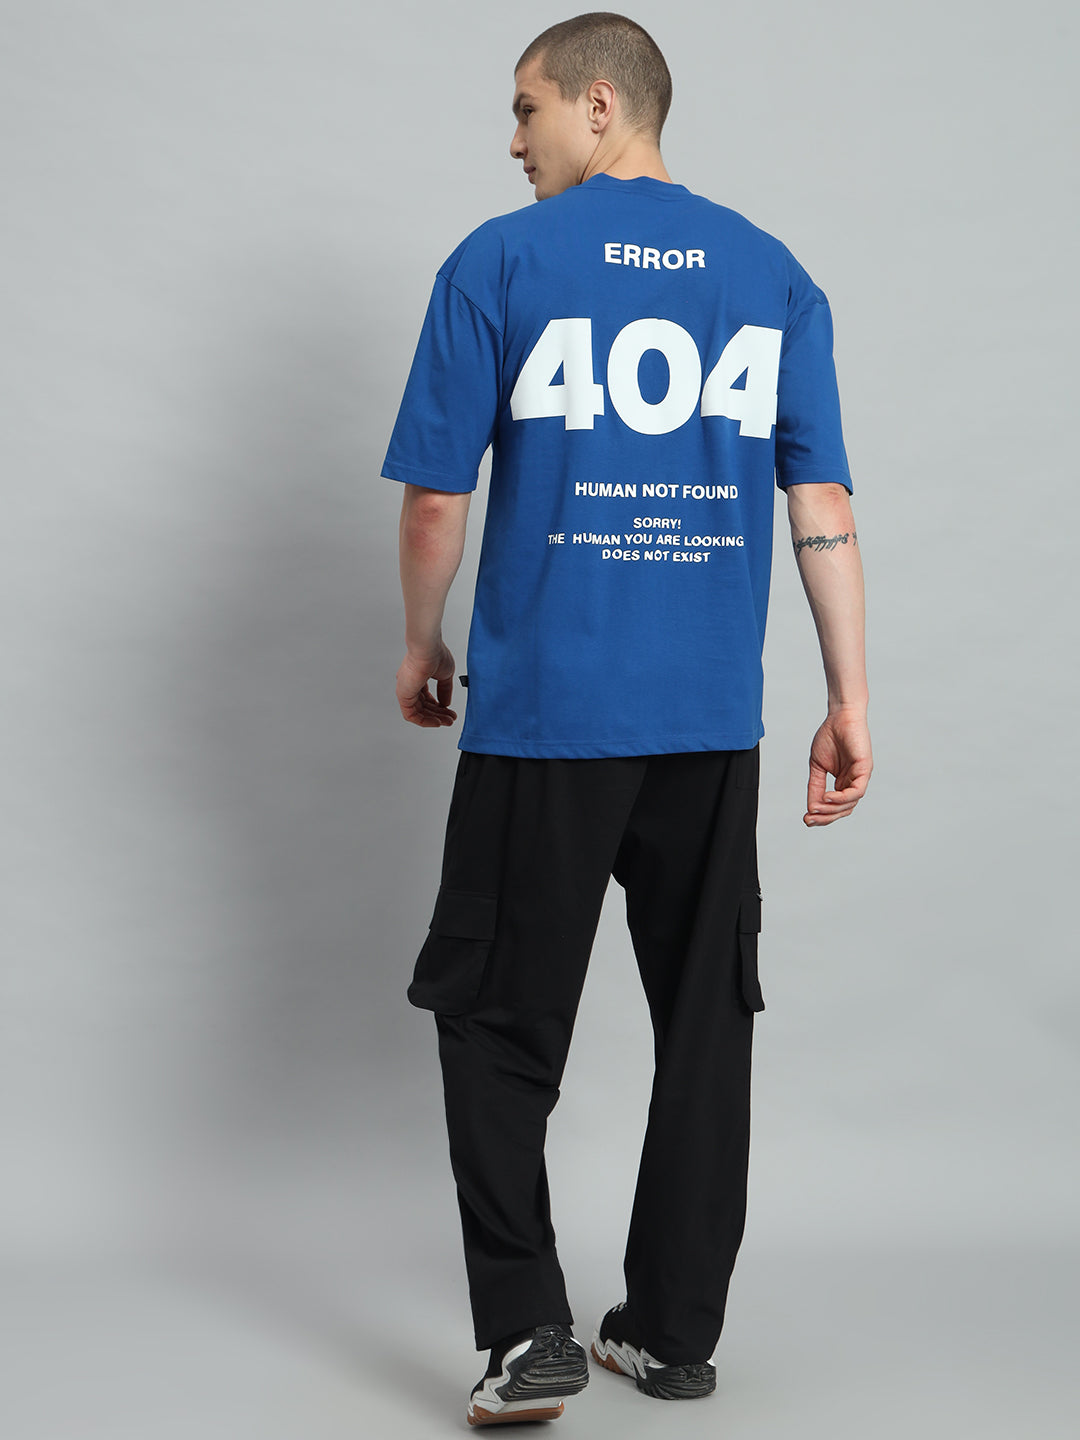 404 logo T-shirt and Trackpant Set